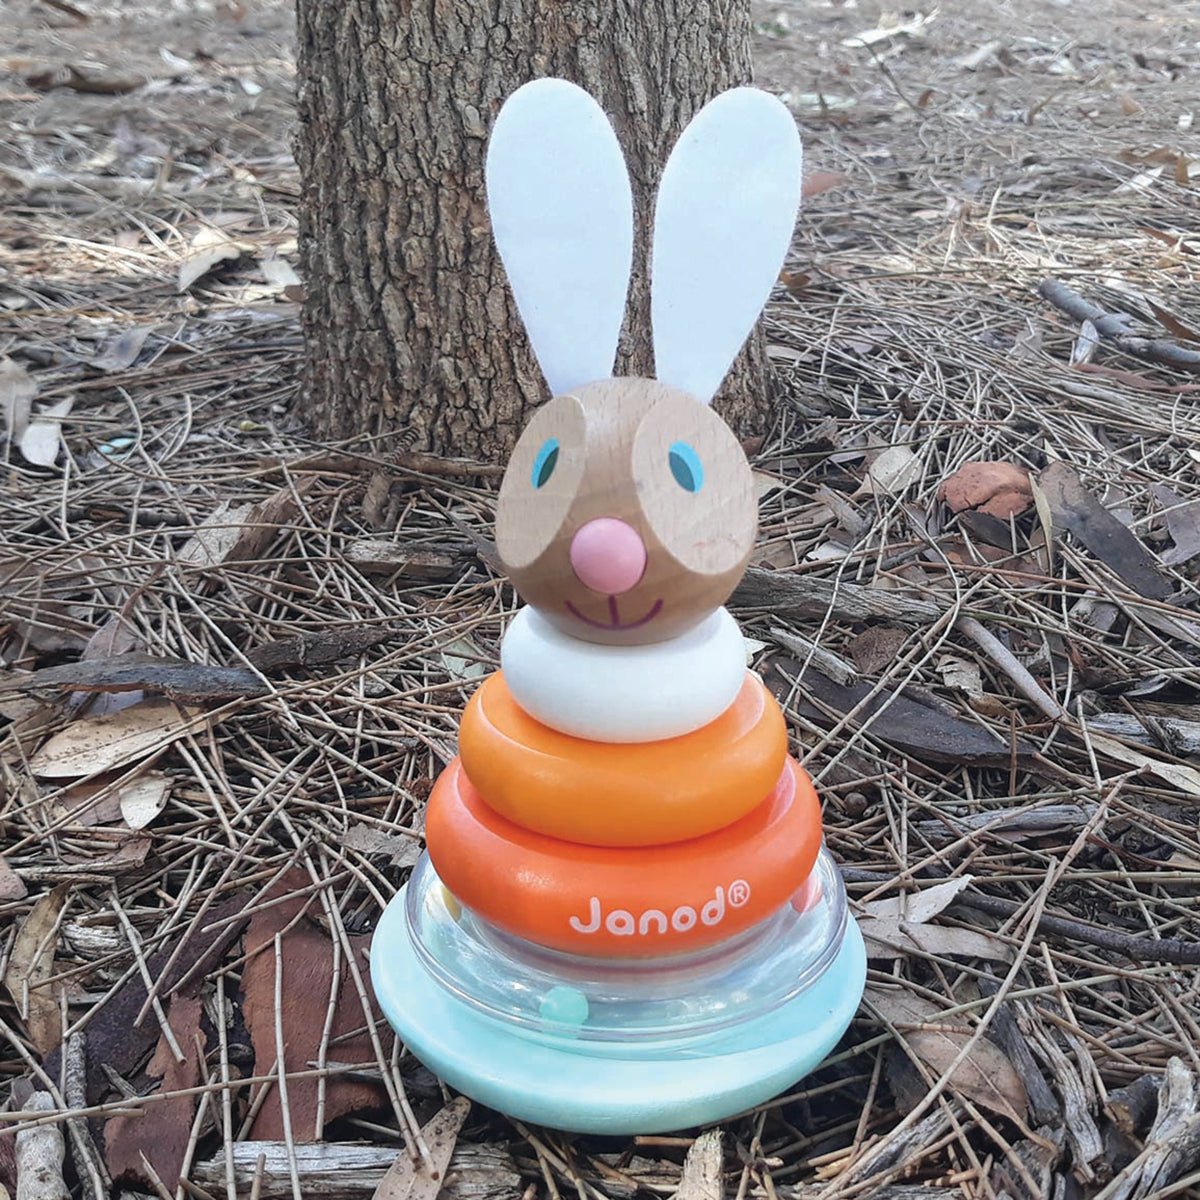 Janod Rabbit Roly Poly | Janod